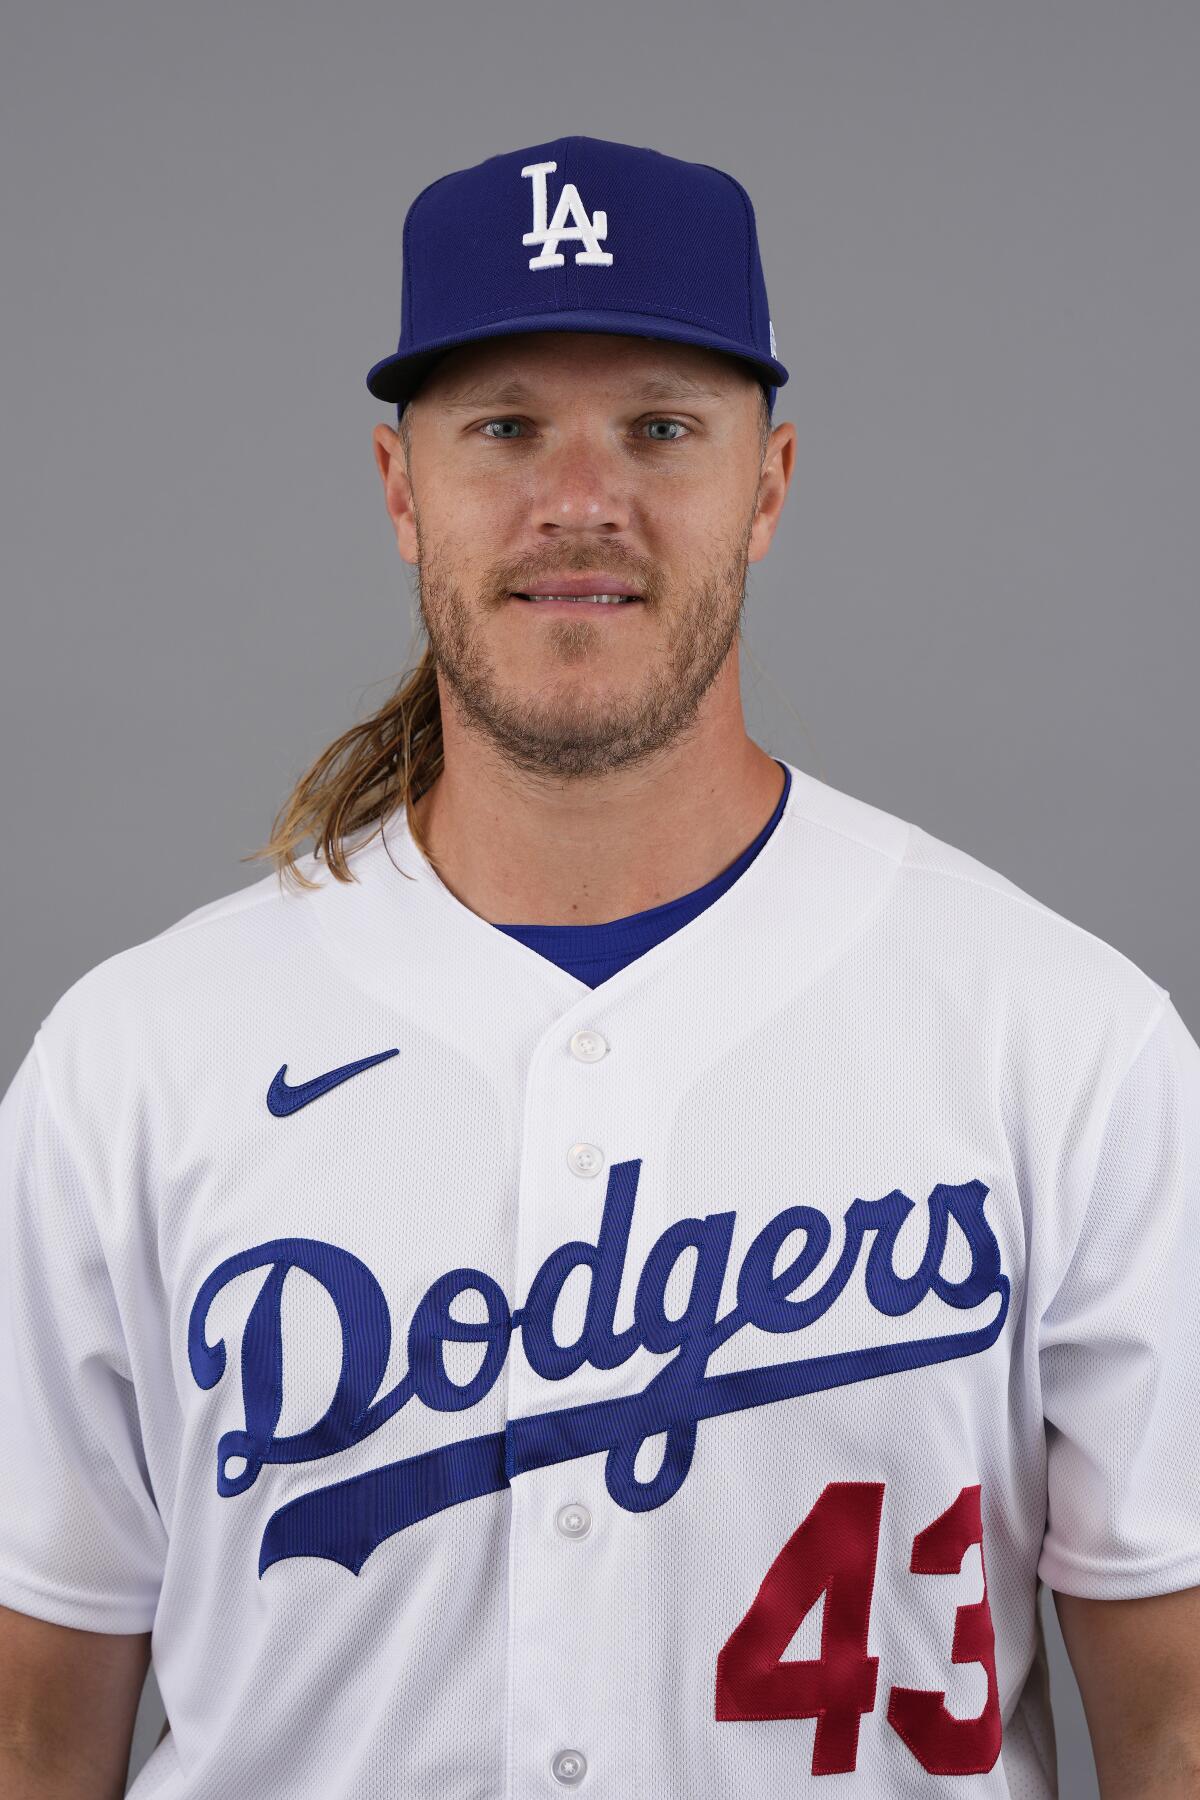 Dodgers starting pitcher Noah Syndergaard